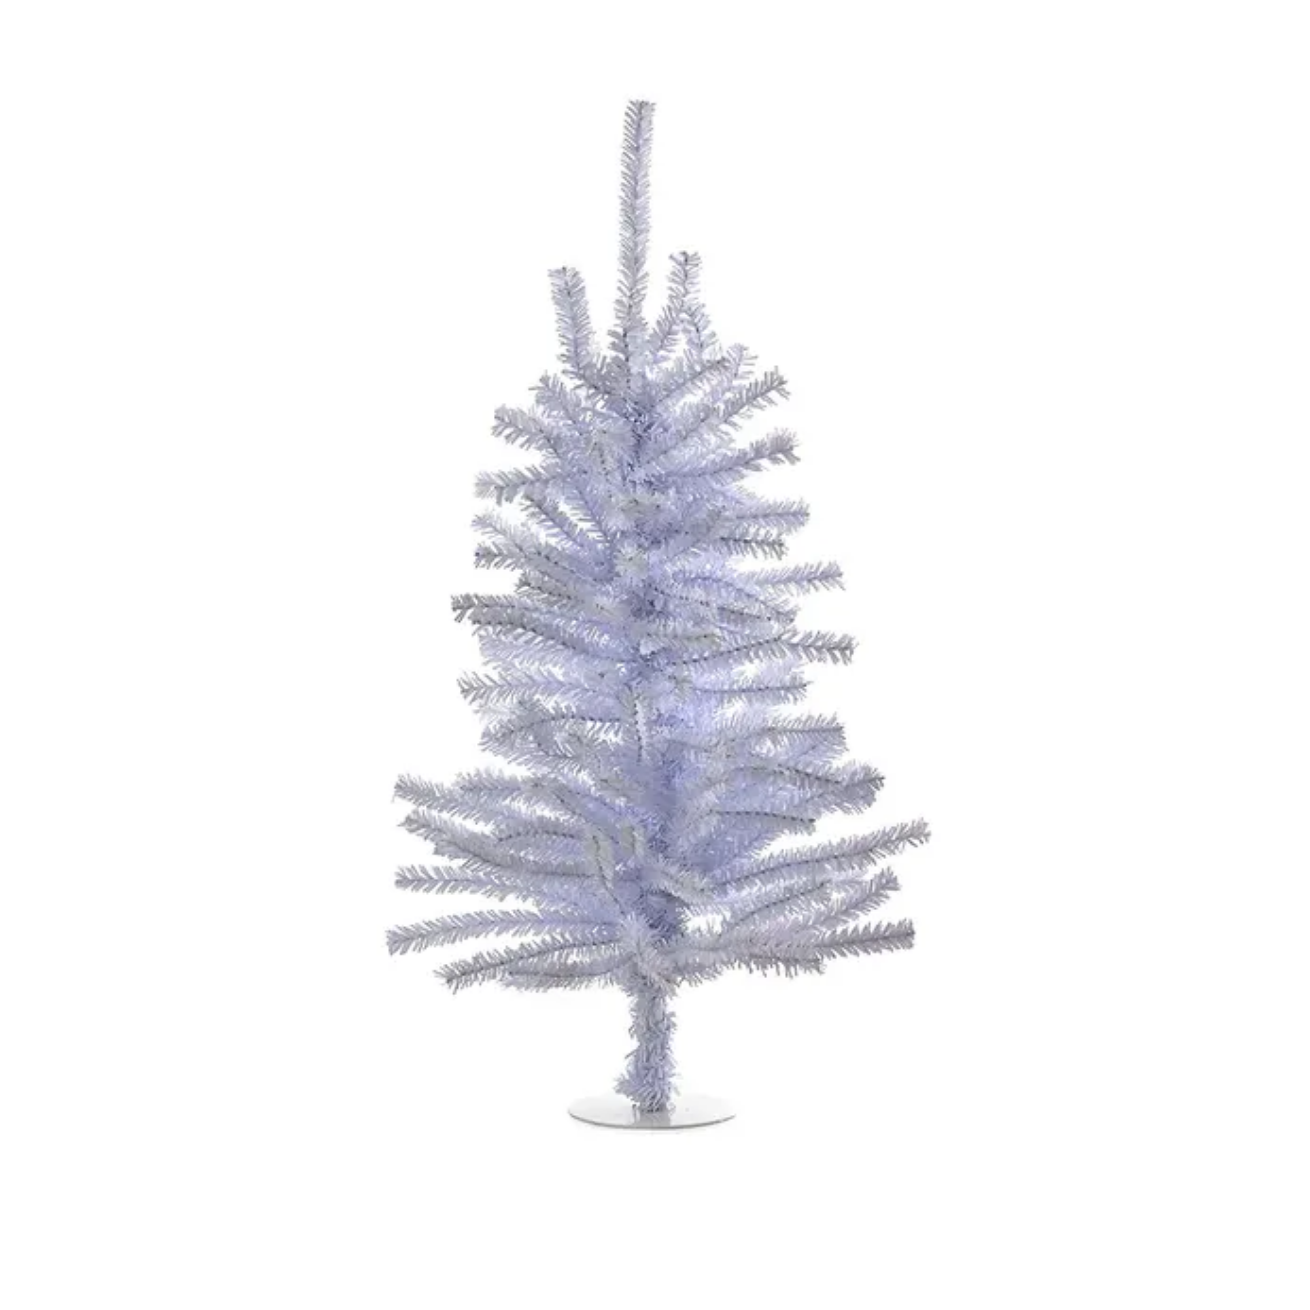 18" Miniature Silver Tinsel Christmas Tree